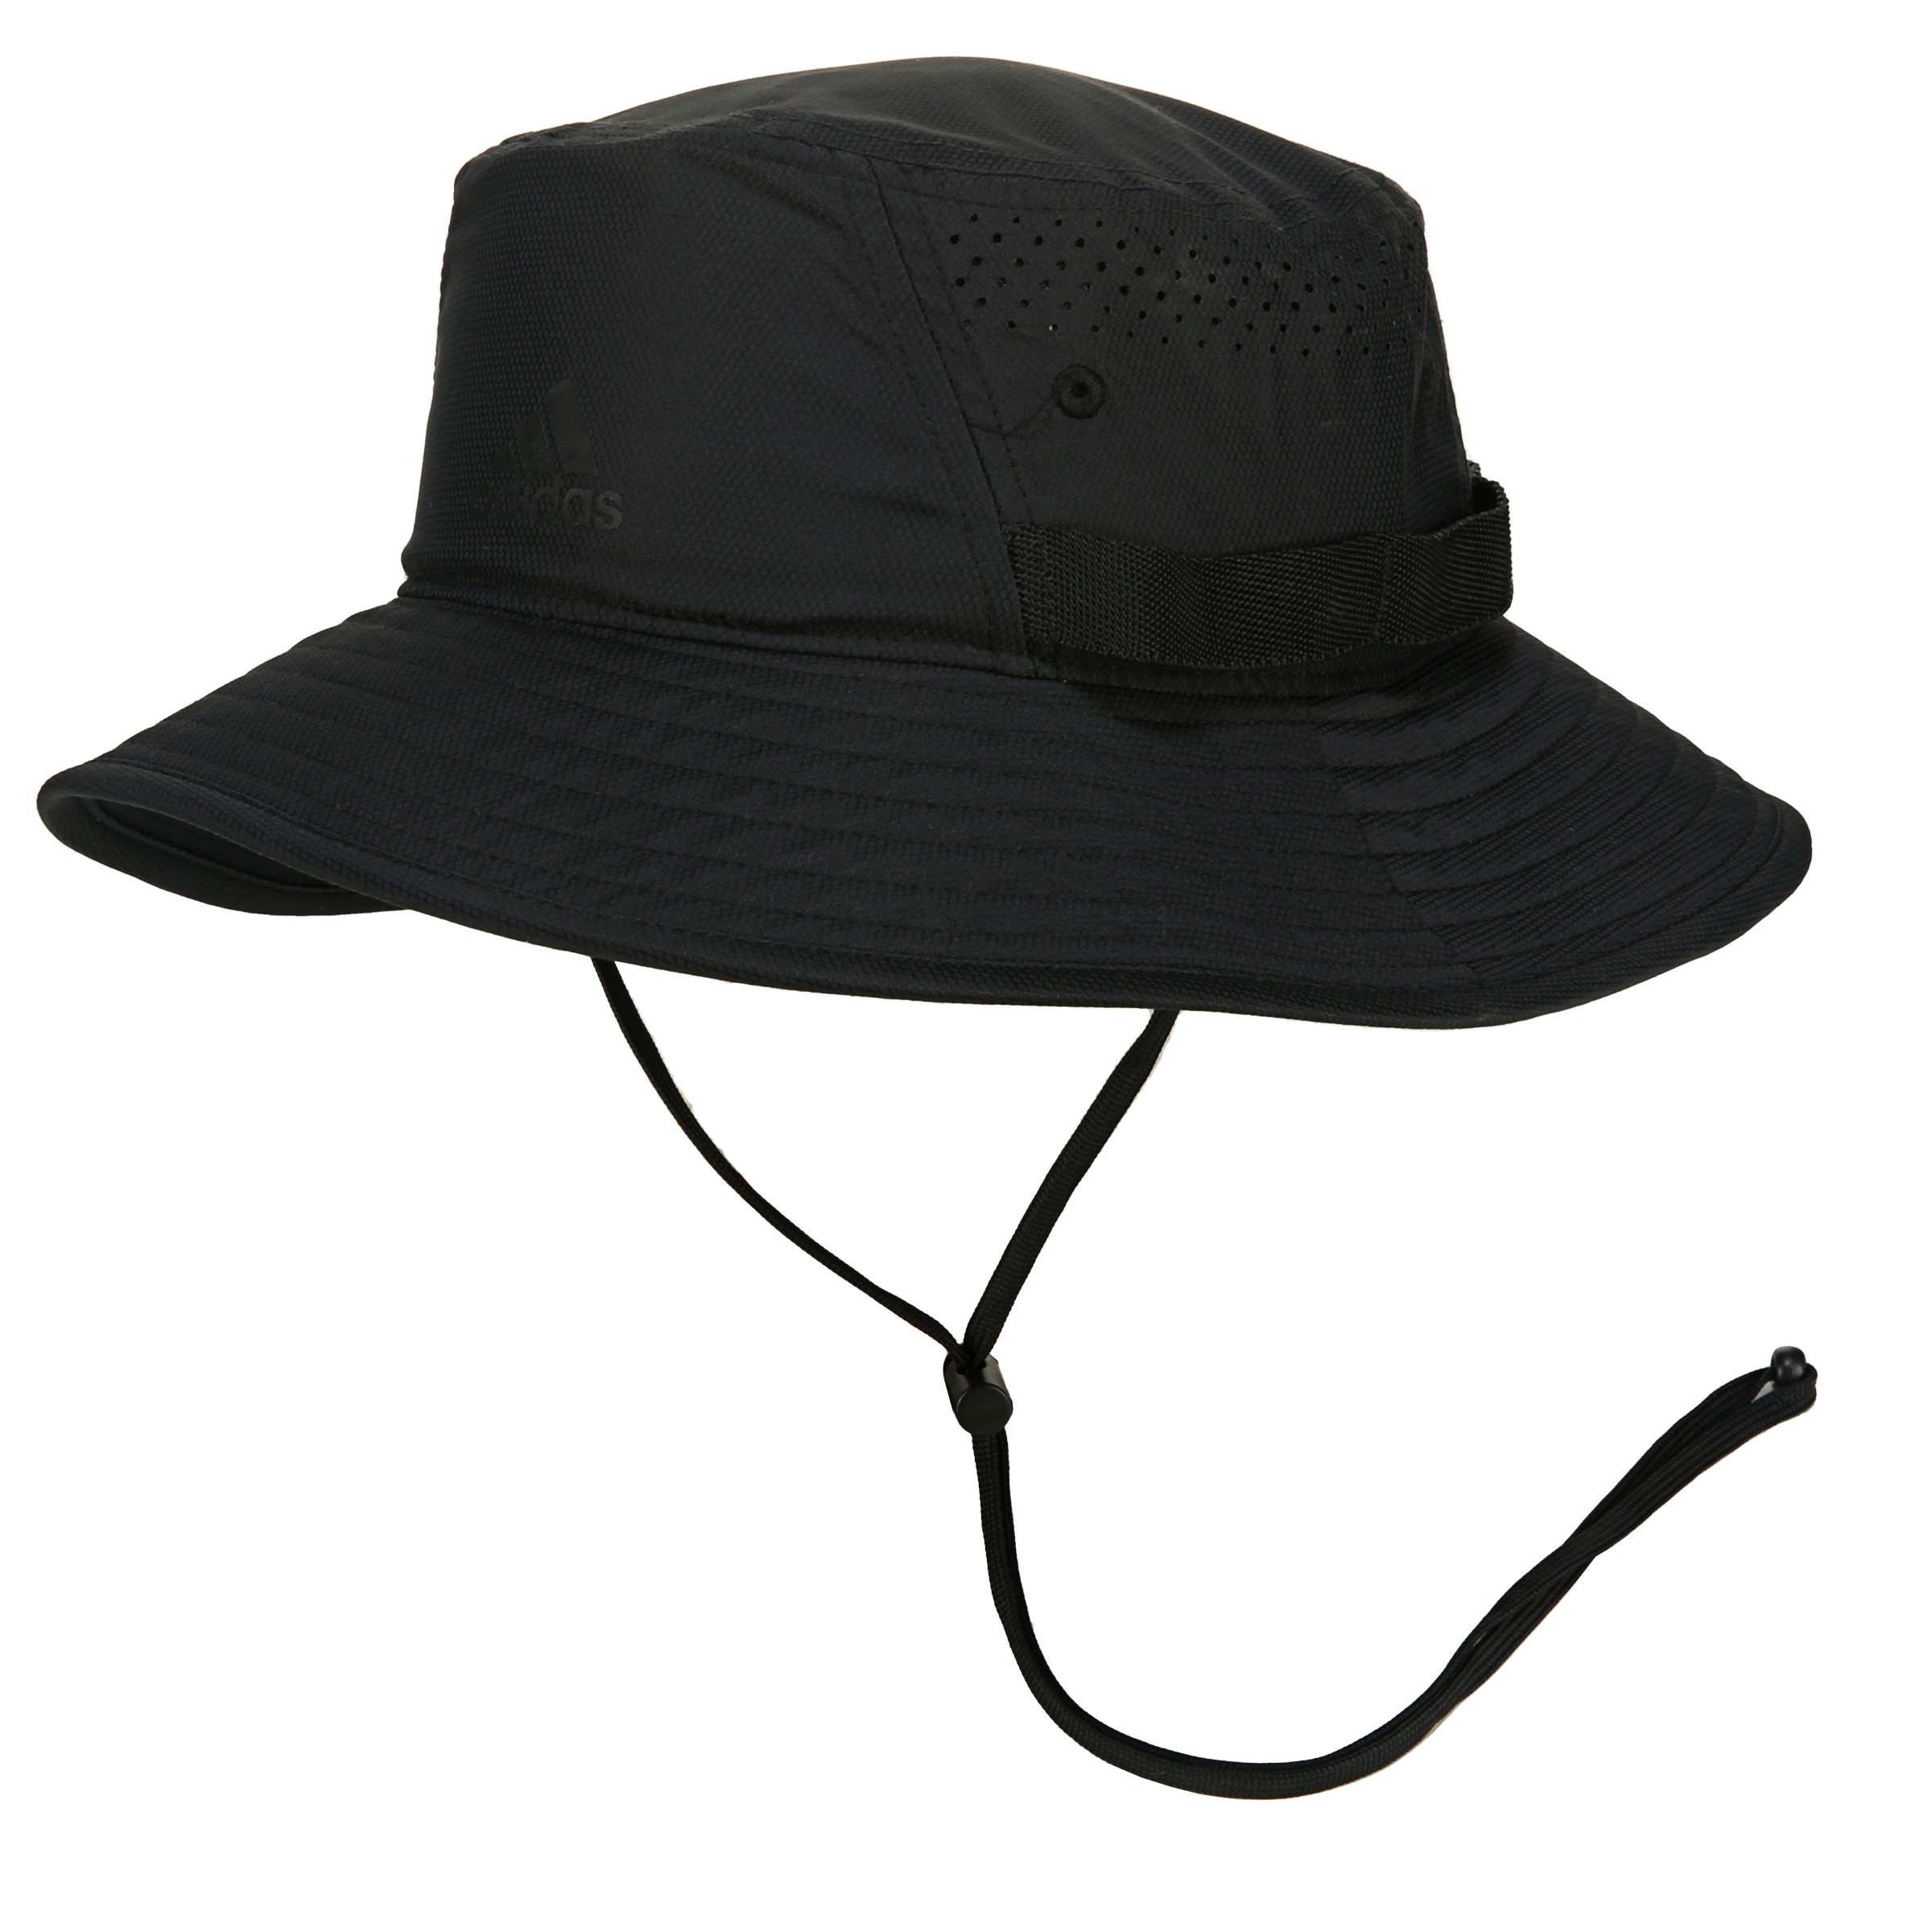 Adidas Victory III Bucket Hat Golf Men's Boonie Fishing Unisex L/XL  Grey/Black